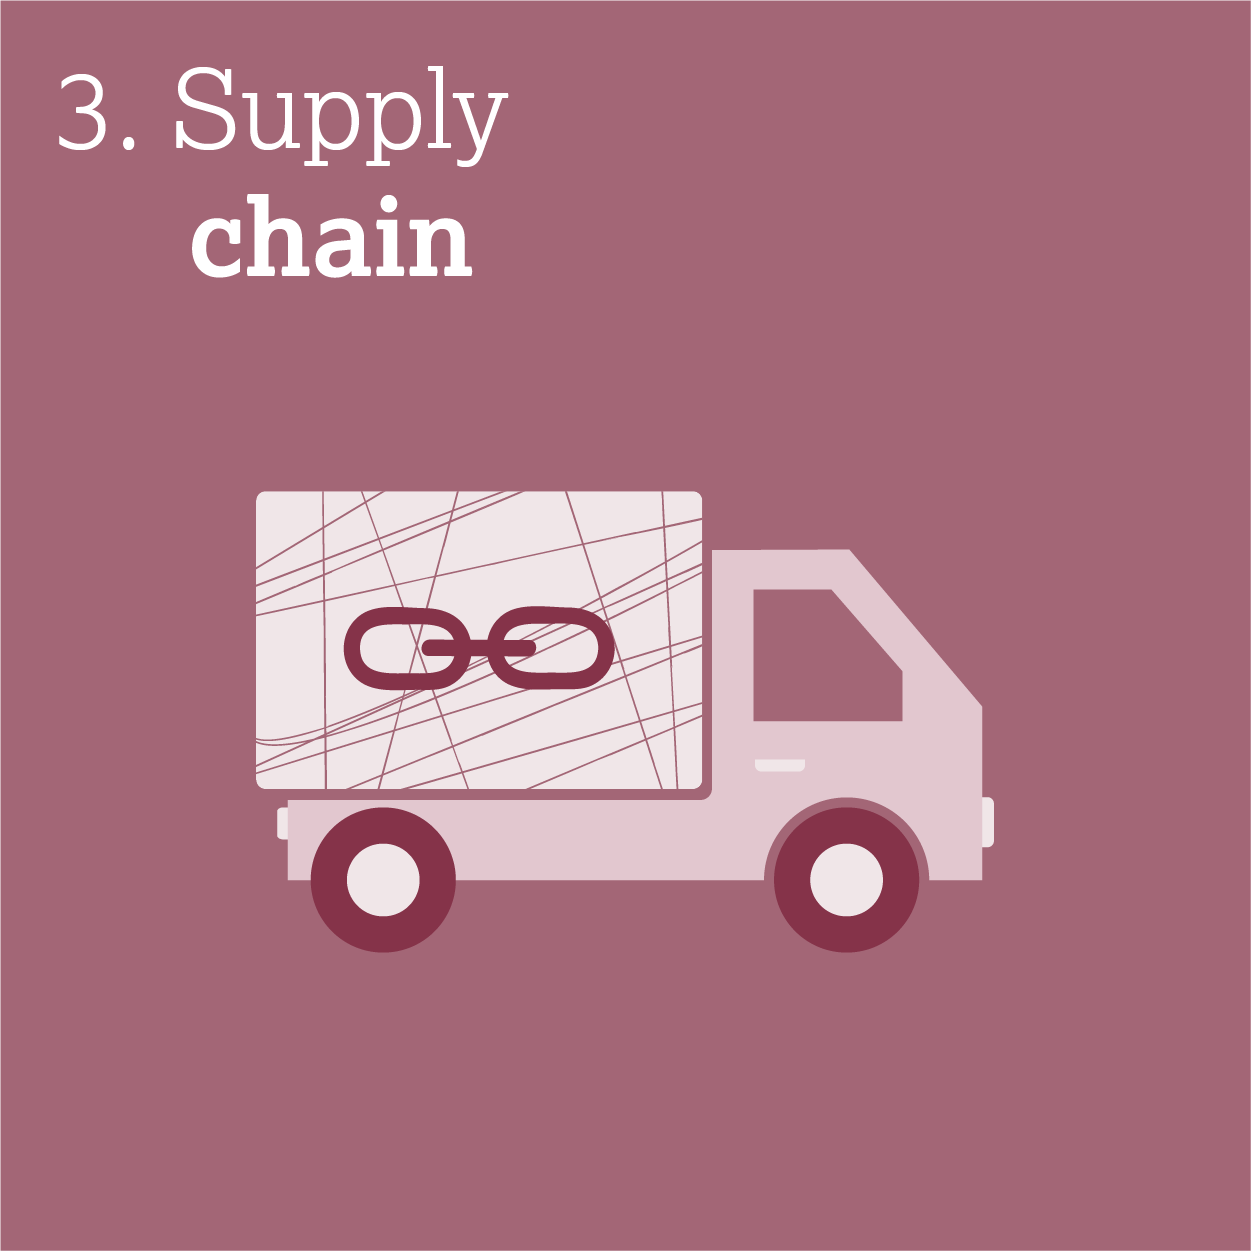 3. Supply chain